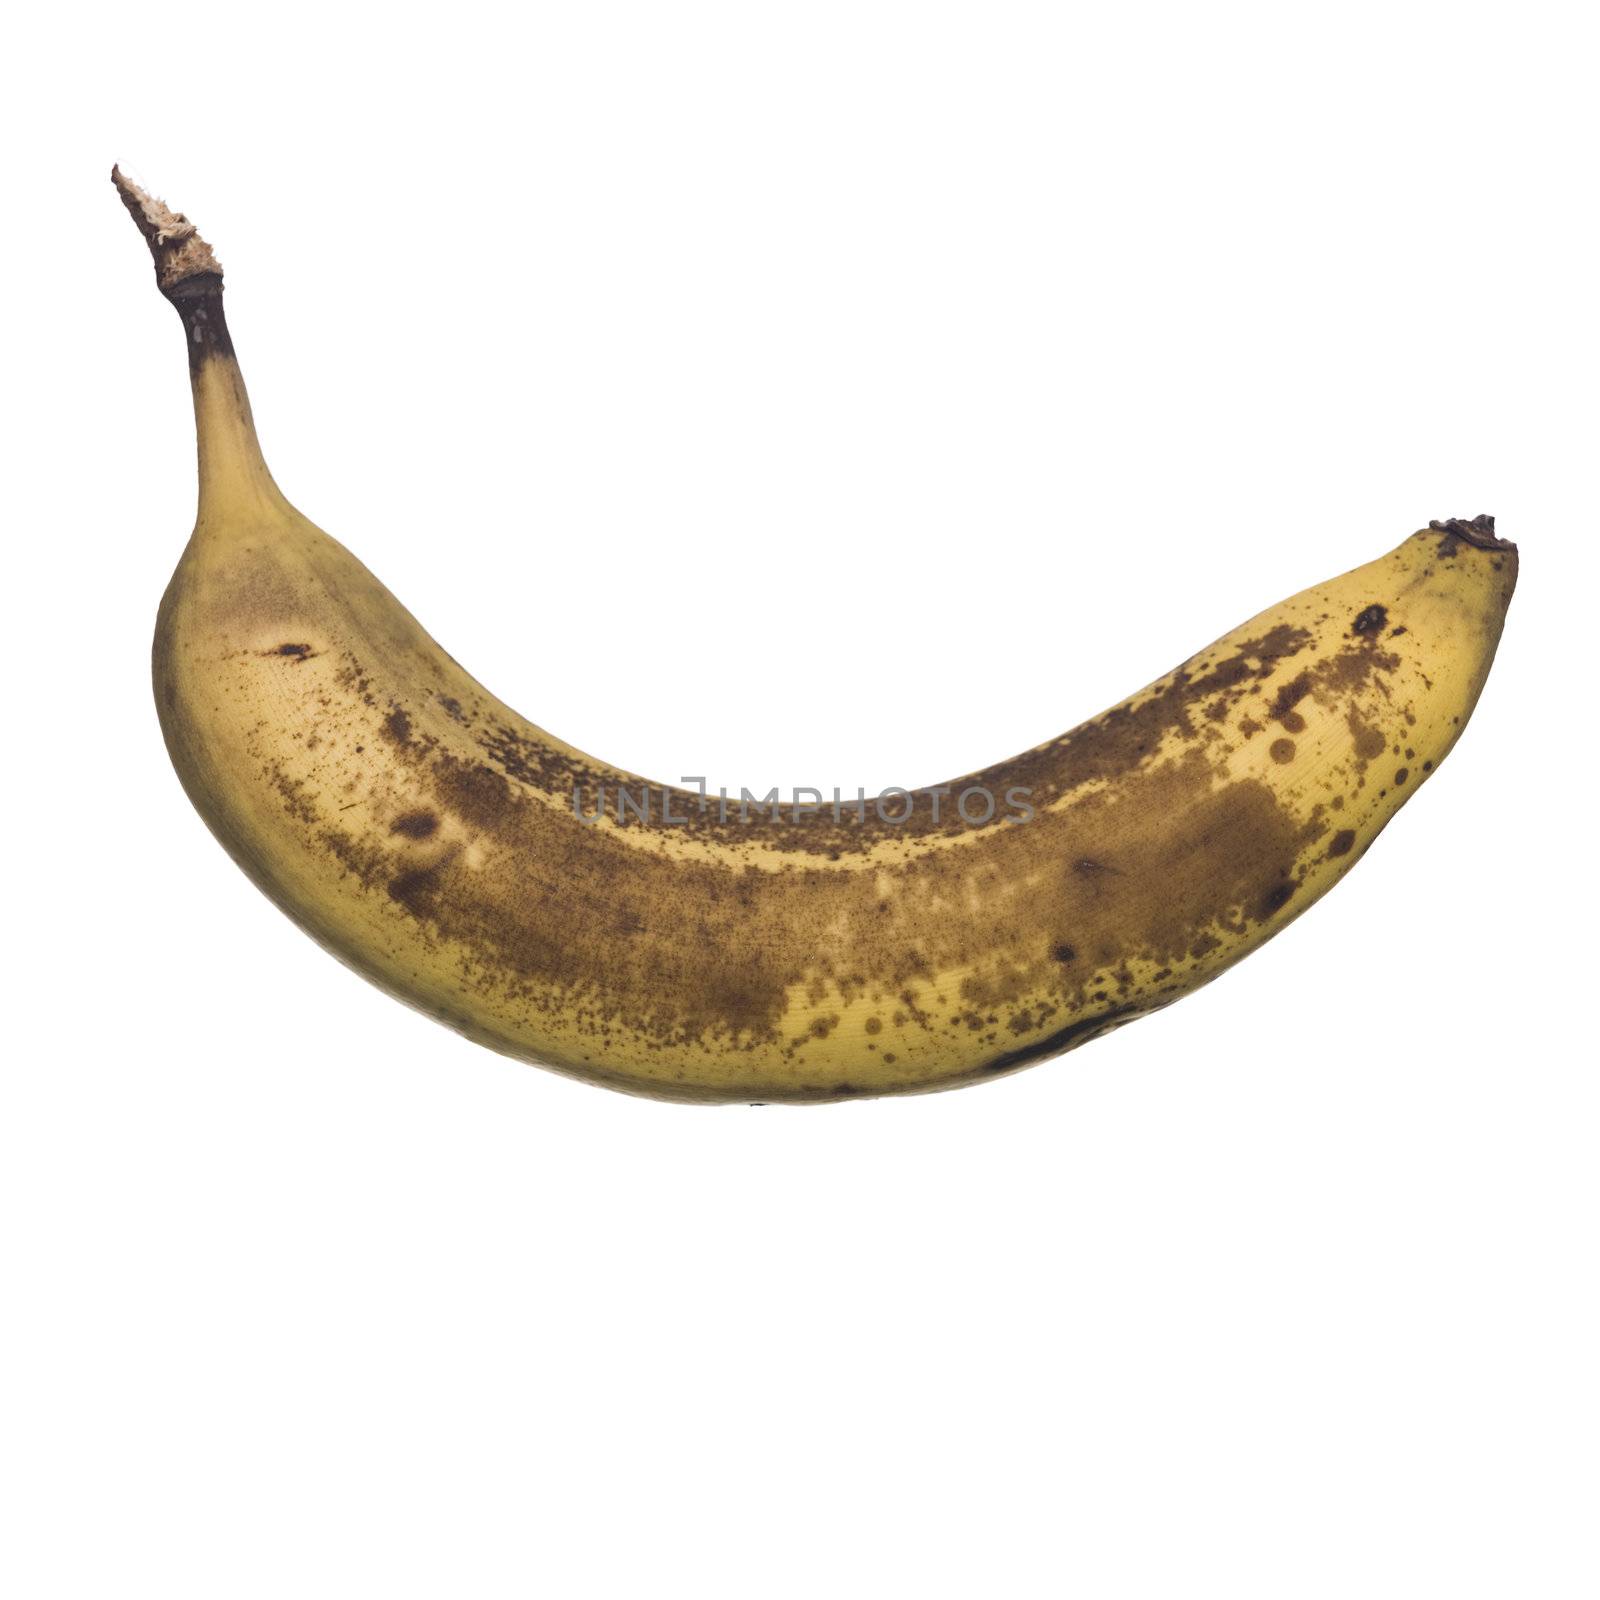 Bad banana by gemenacom